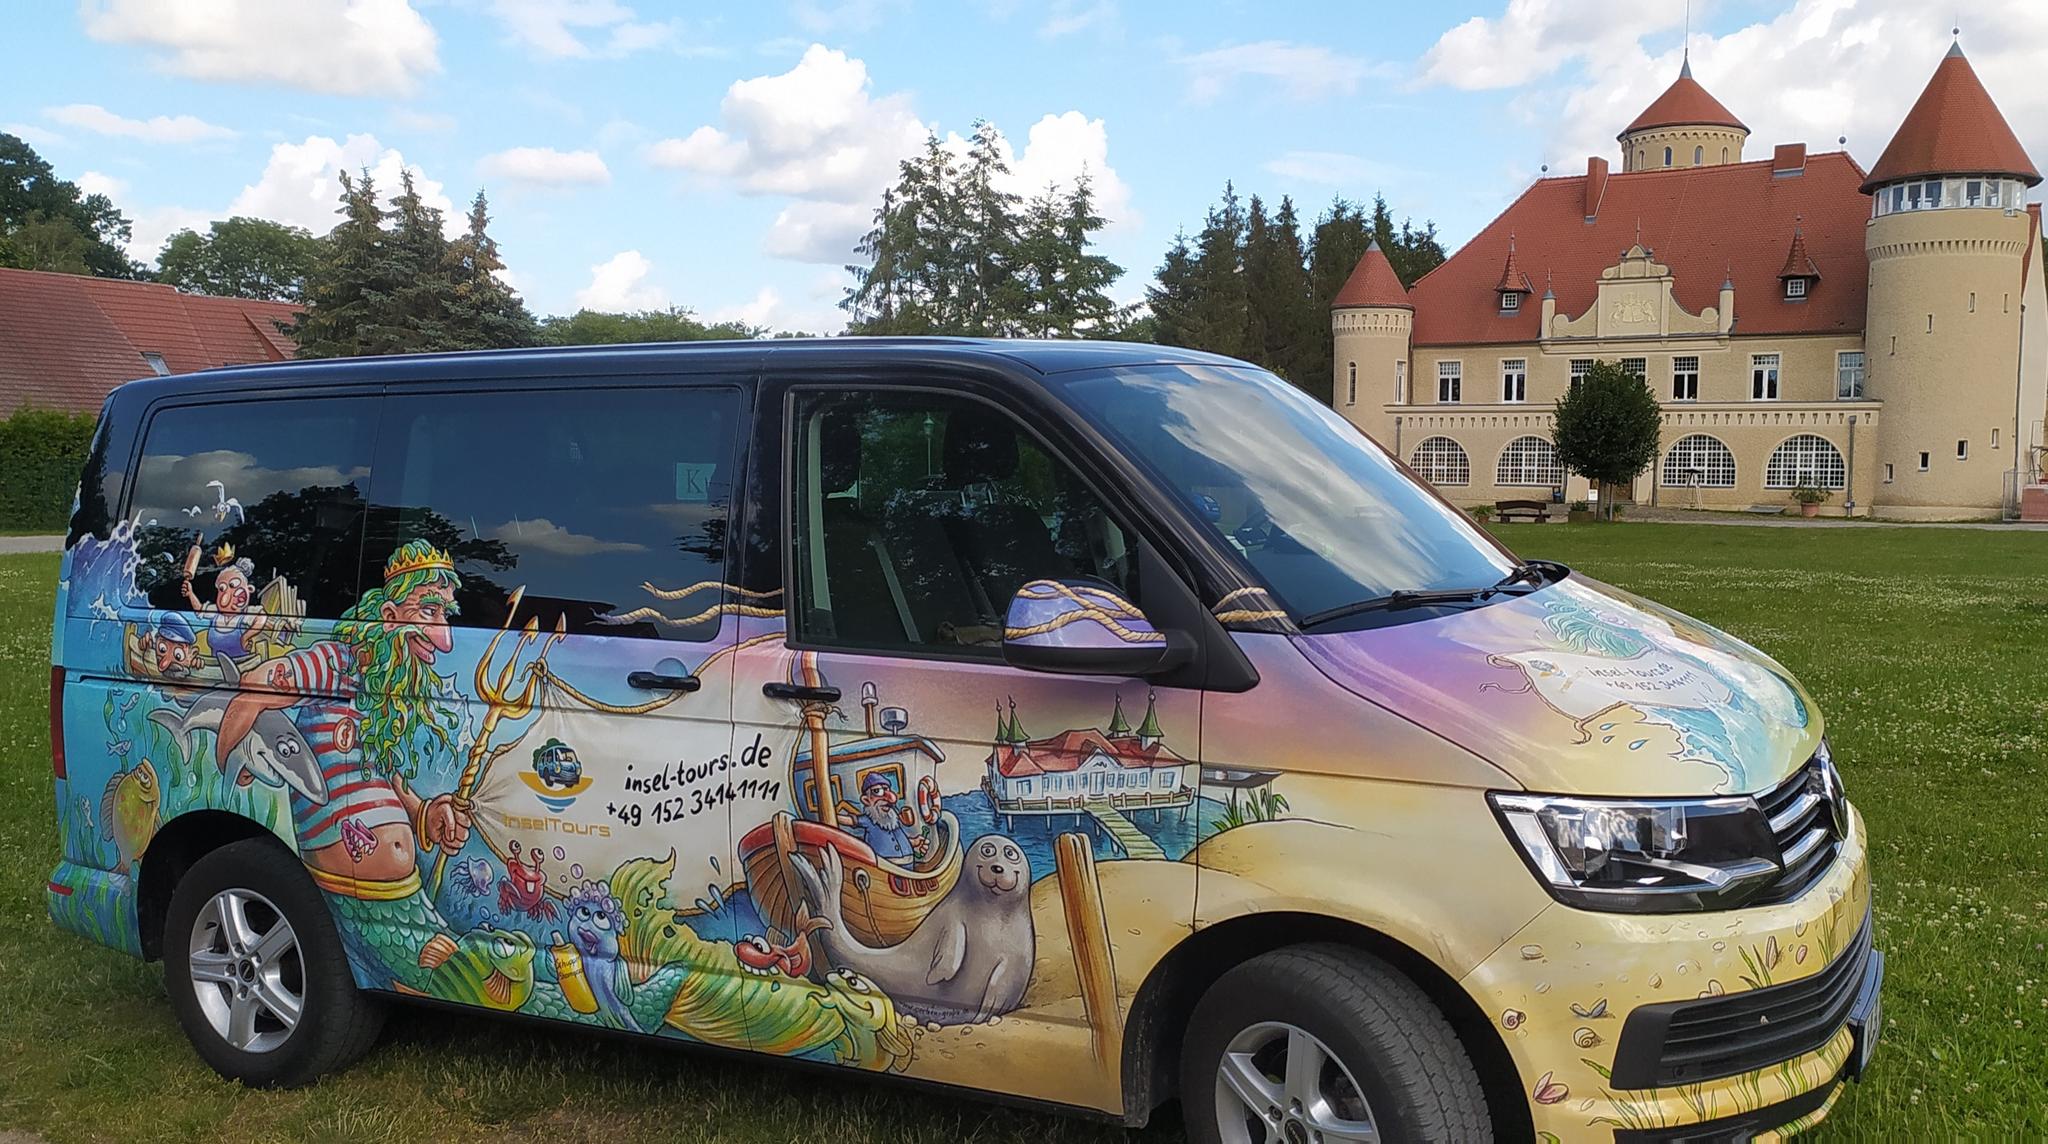 Bunter "InselTours"-Bus vor dem Schloss Stolpe